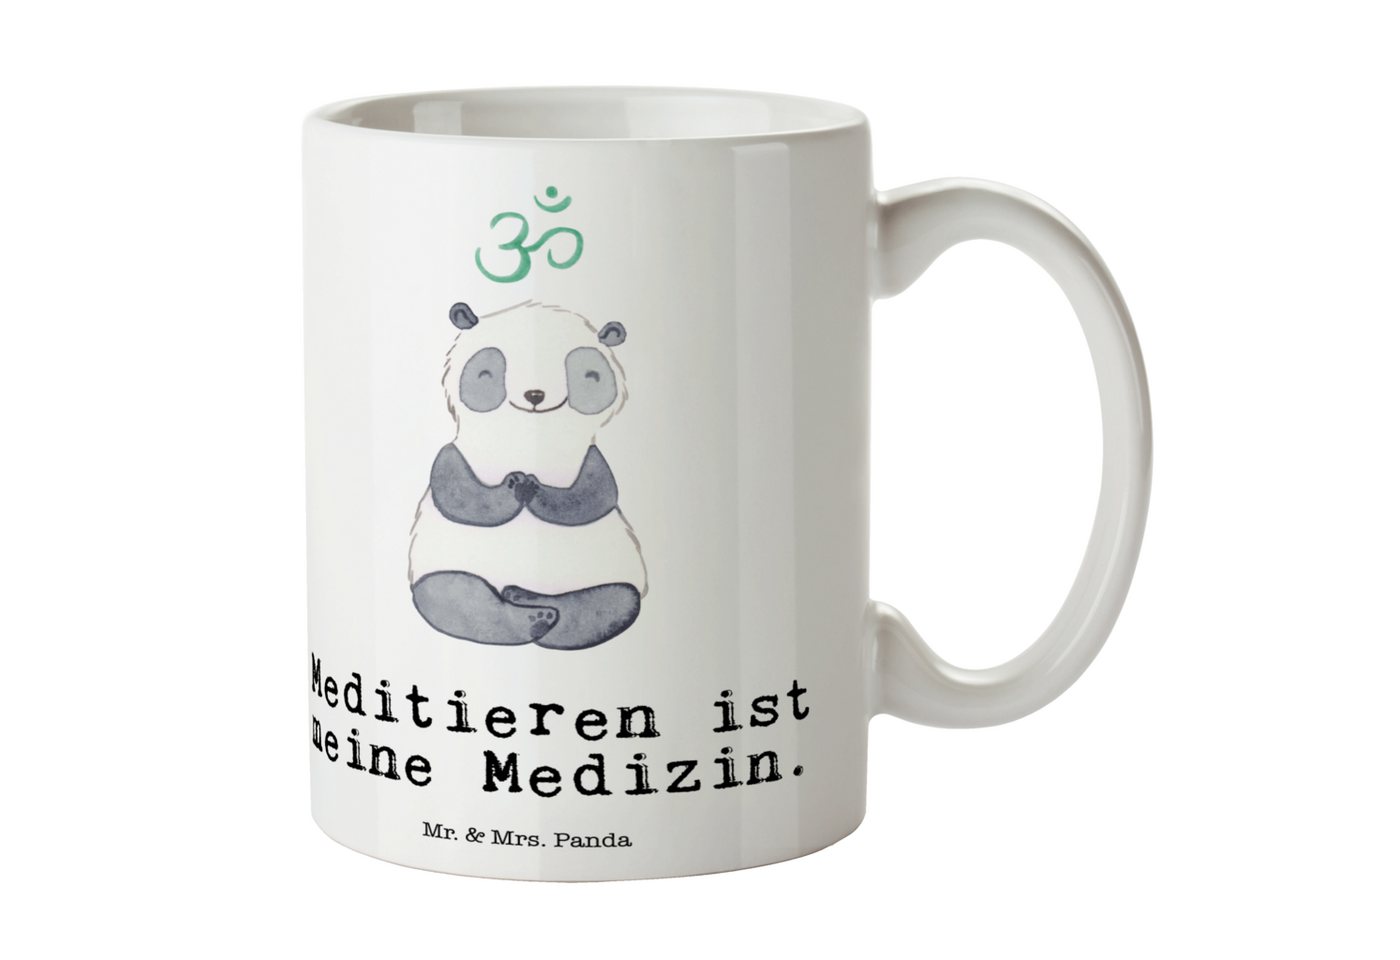 Mr. & Mrs. Panda Tasse Panda Meditieren - Weiß - Geschenk, Kaffeetasse, Meditation, Hobby, S, Keramik, Herzberührende Designs von Mr. & Mrs. Panda